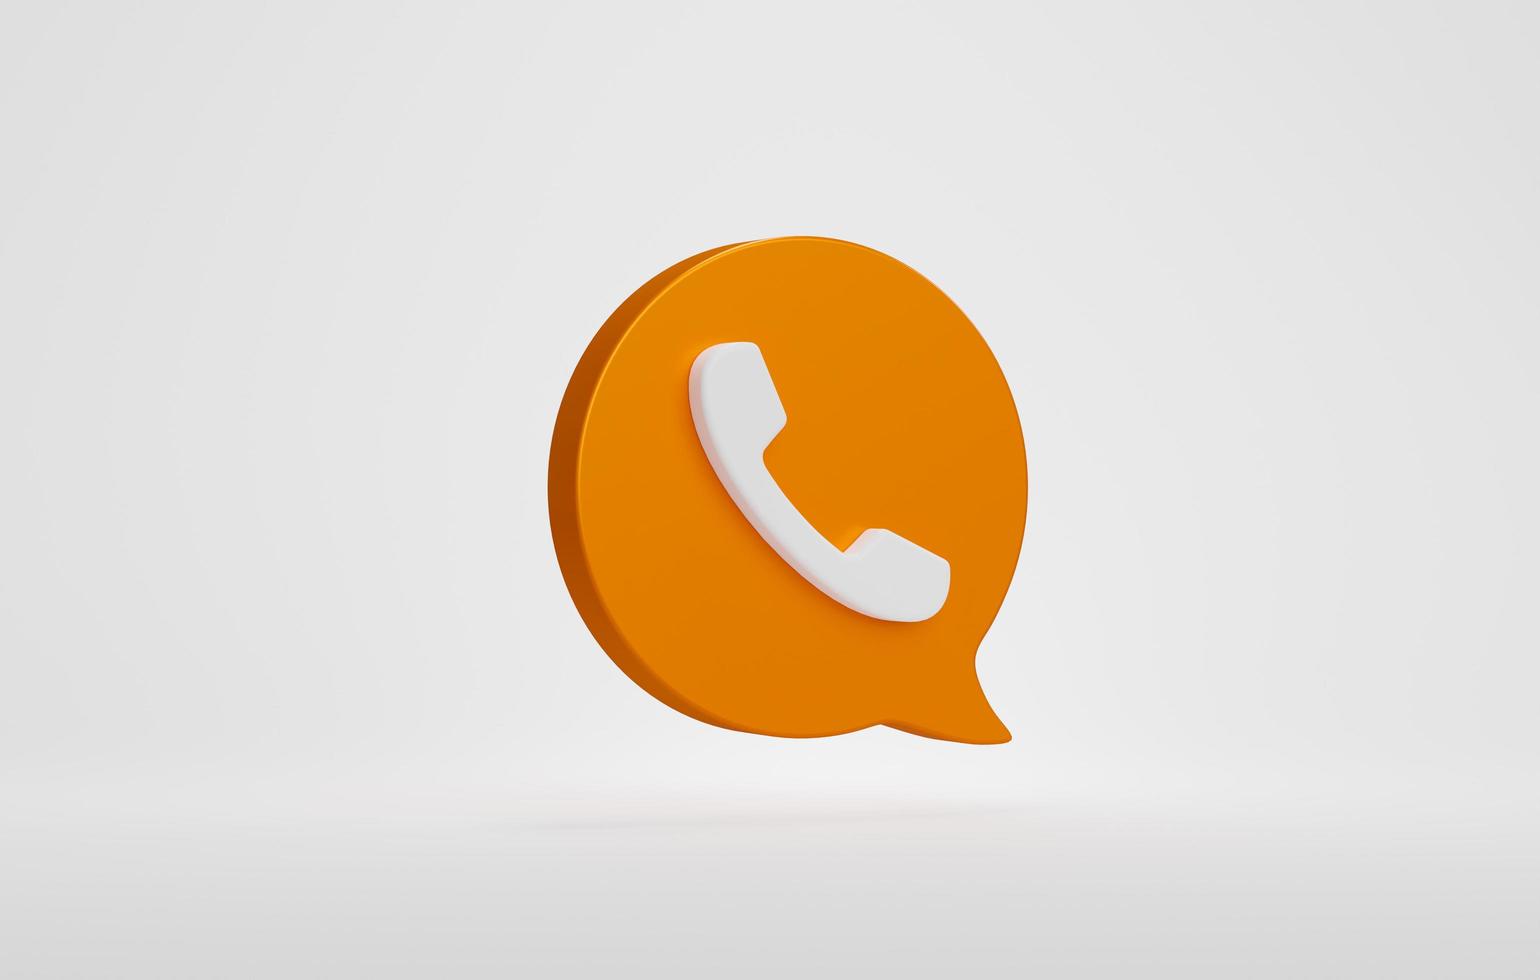 orange telefonikon eller kontakt webbplats mobil symbol isolerad på vit bakgrund, service support hotline koncept. 3d-rendering. foto